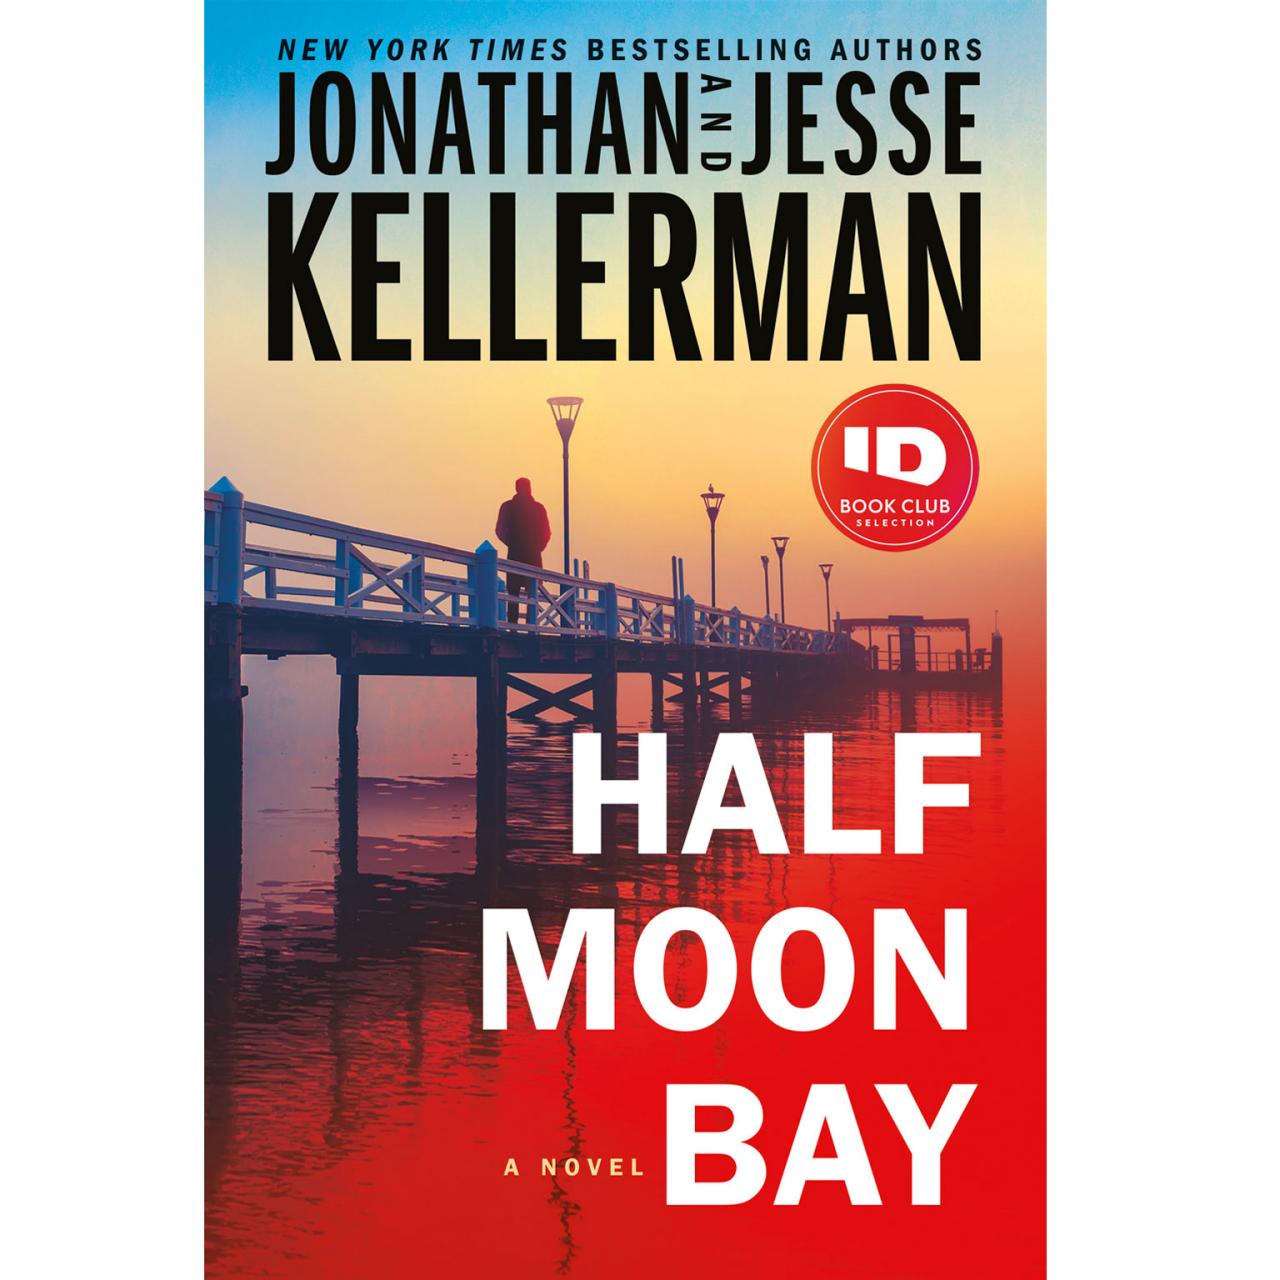 Half Moon Bay by Jonathan Kellerman and Jesse Kellerman, ID Book Club